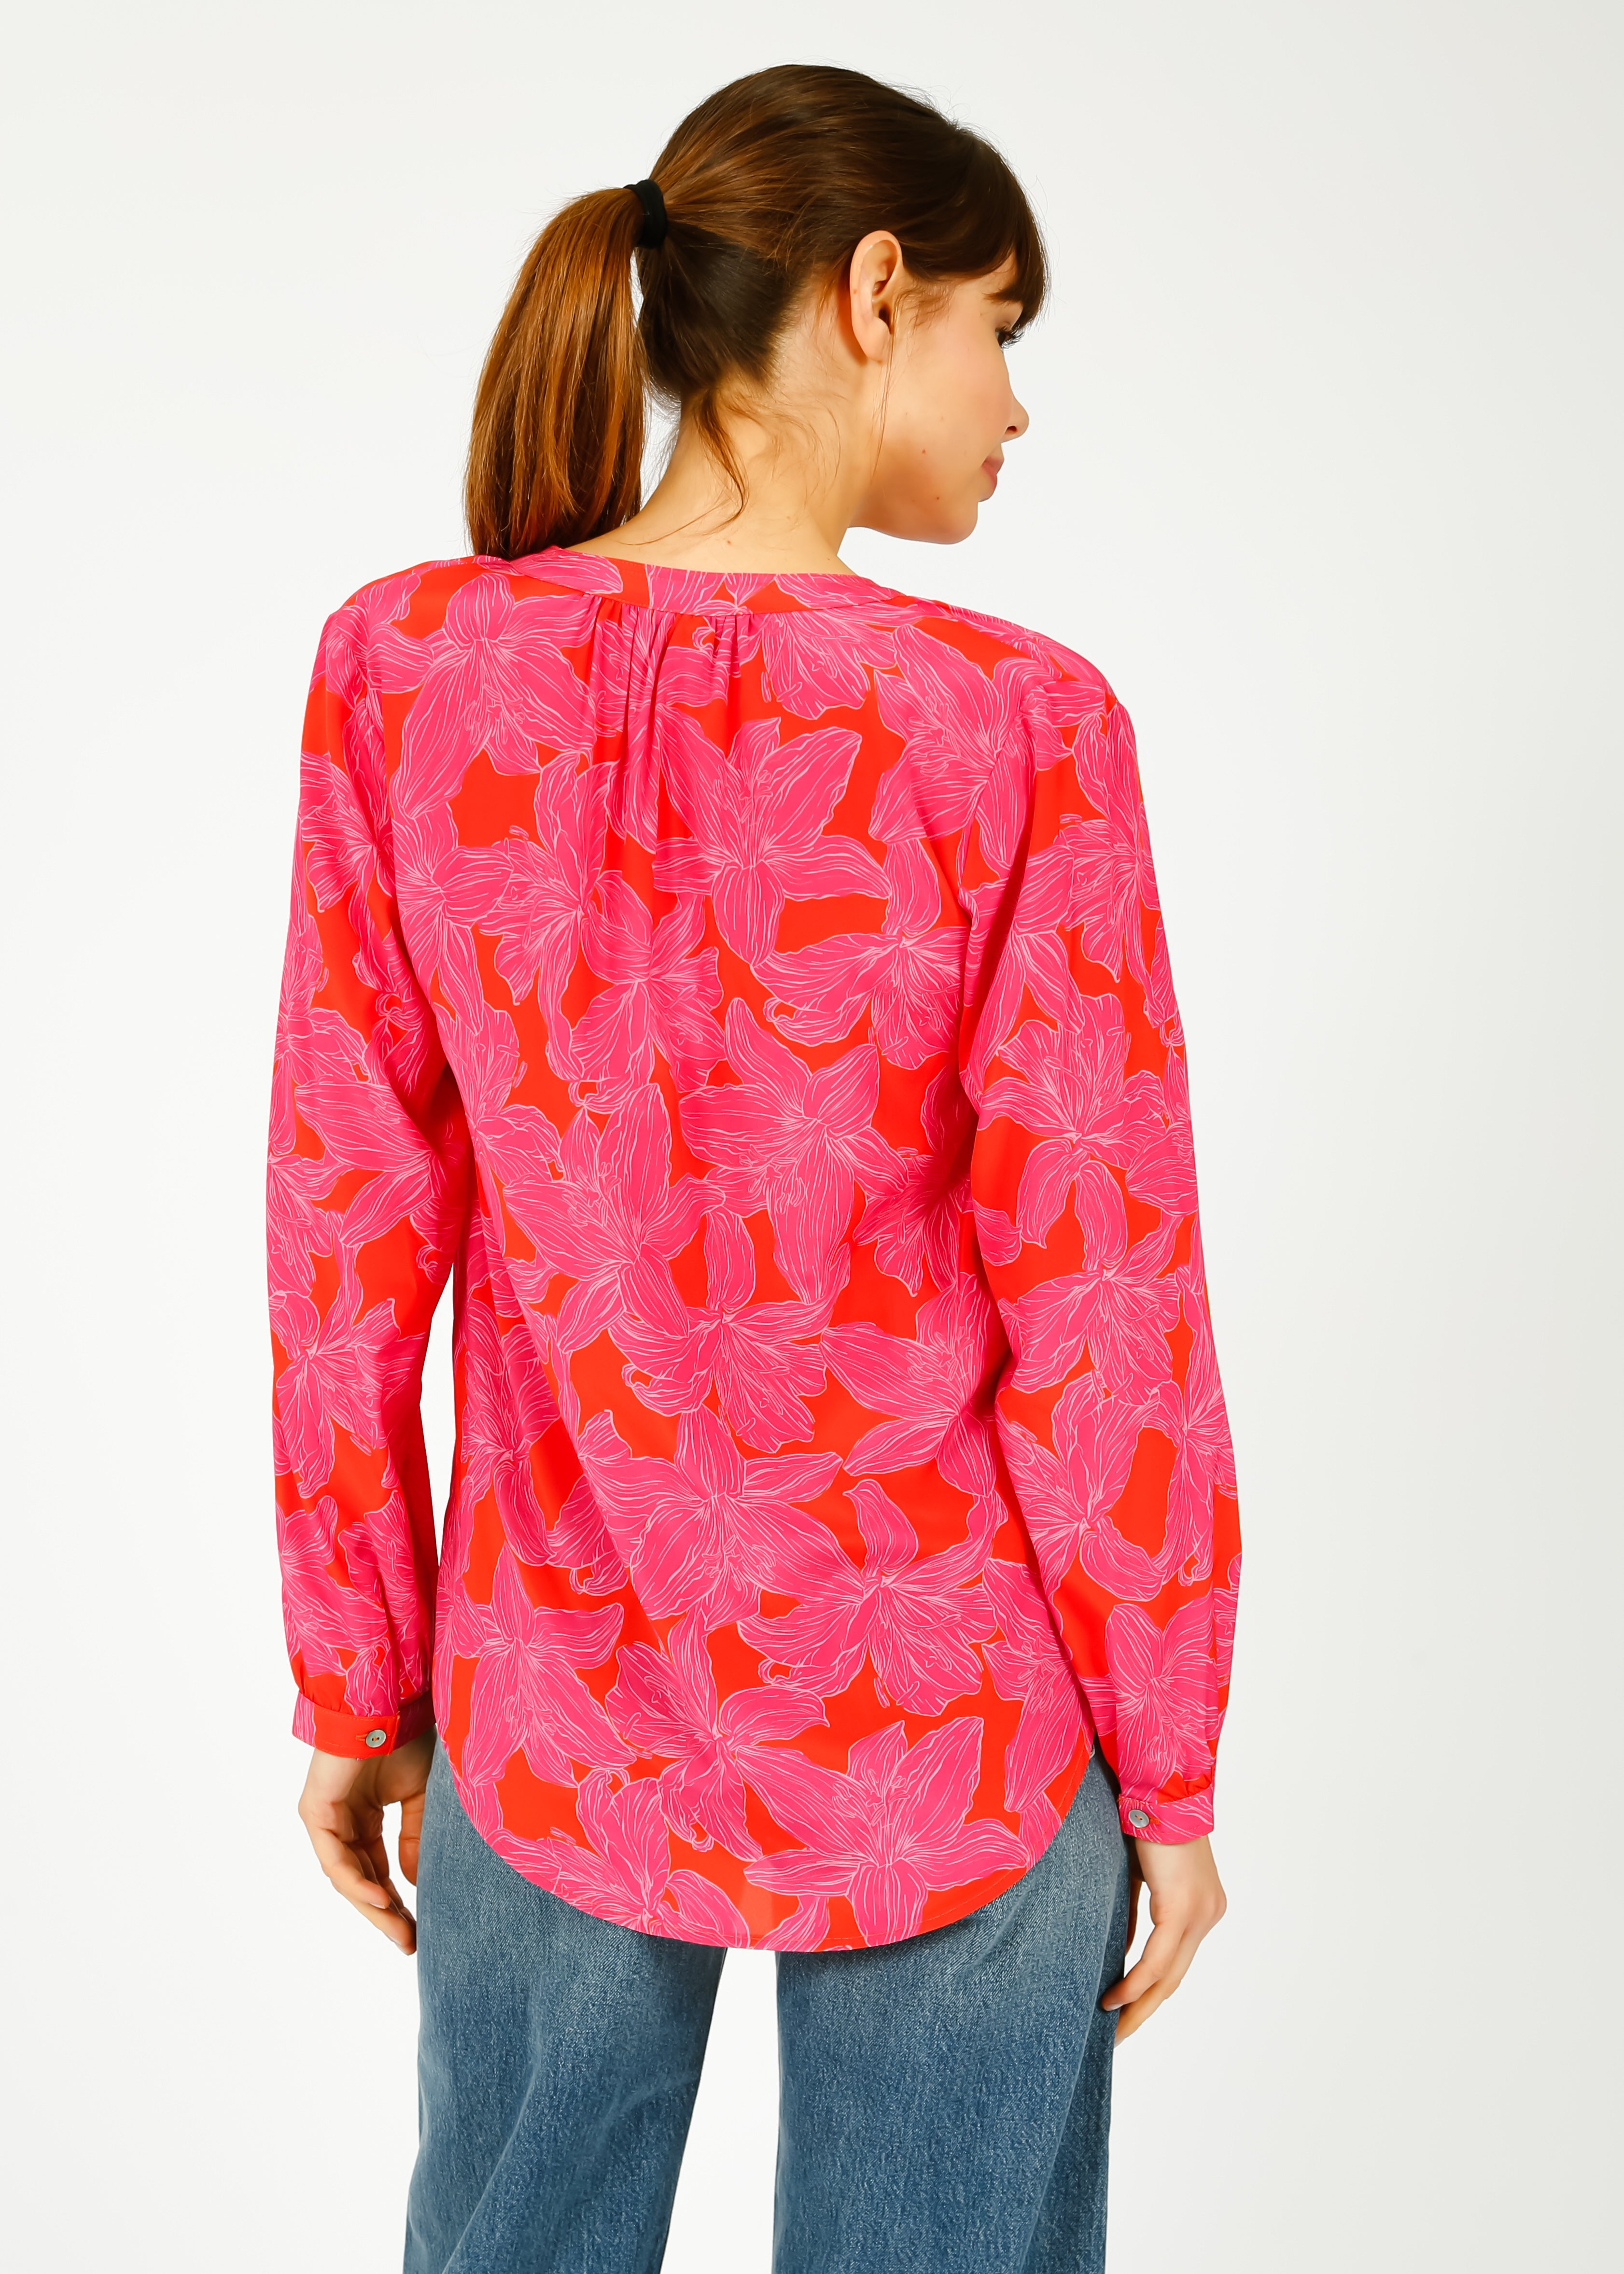 PPL Sandy Silk Shirt in Lily 02 Pink